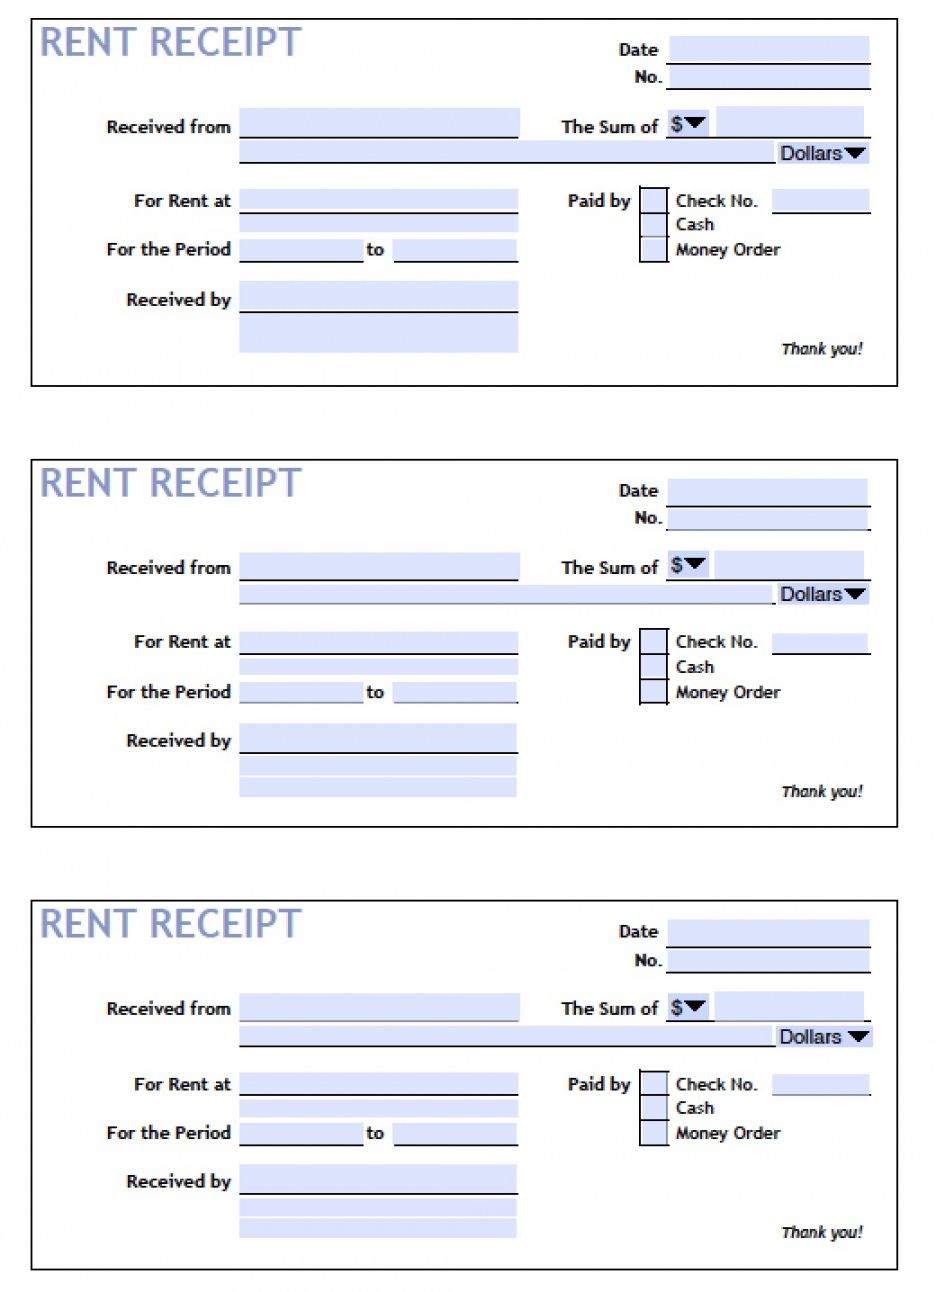 rent-receipt-templates-emetonlineblog-printable-rent-receipt-template